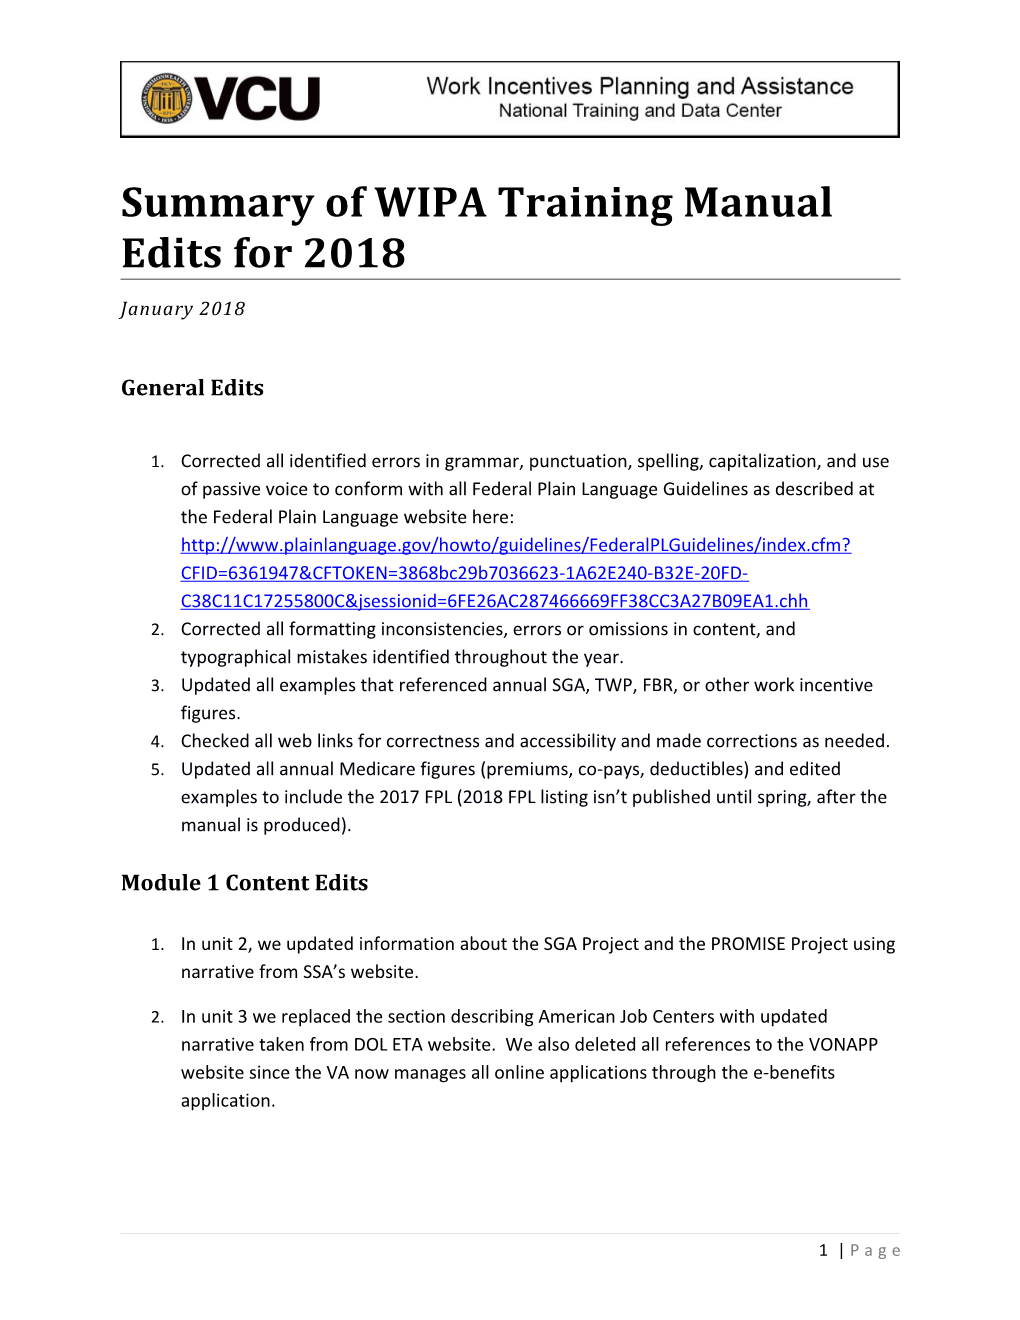 Summary of WIPA Training Manual Edits for 2018